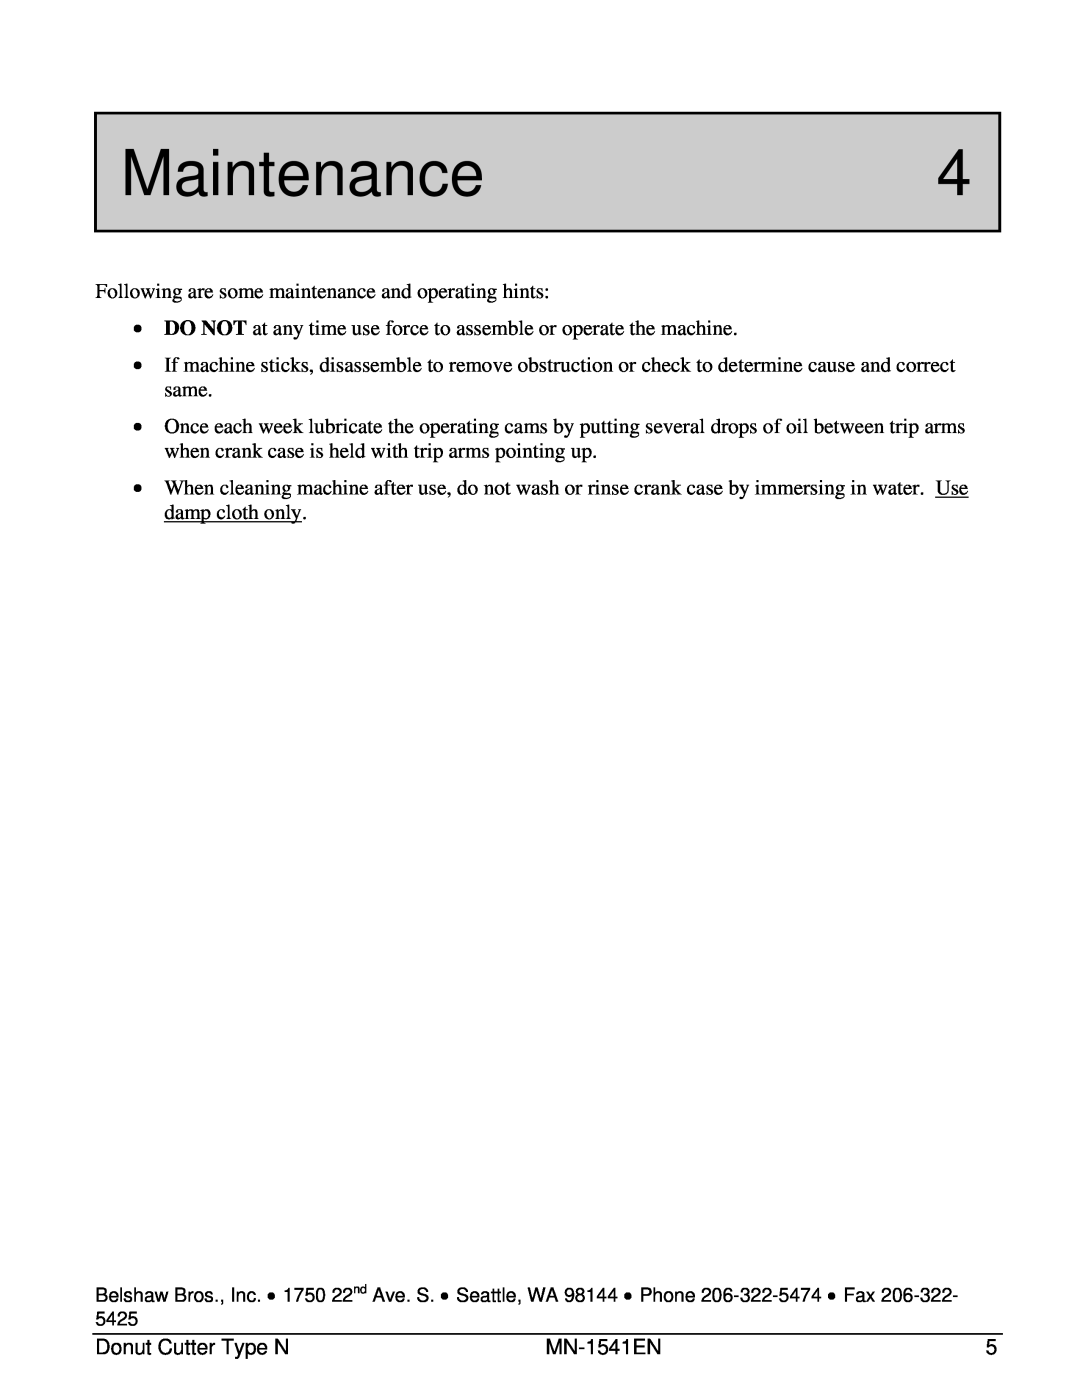 Belshaw Brothers 616BT manual Maintenance4 